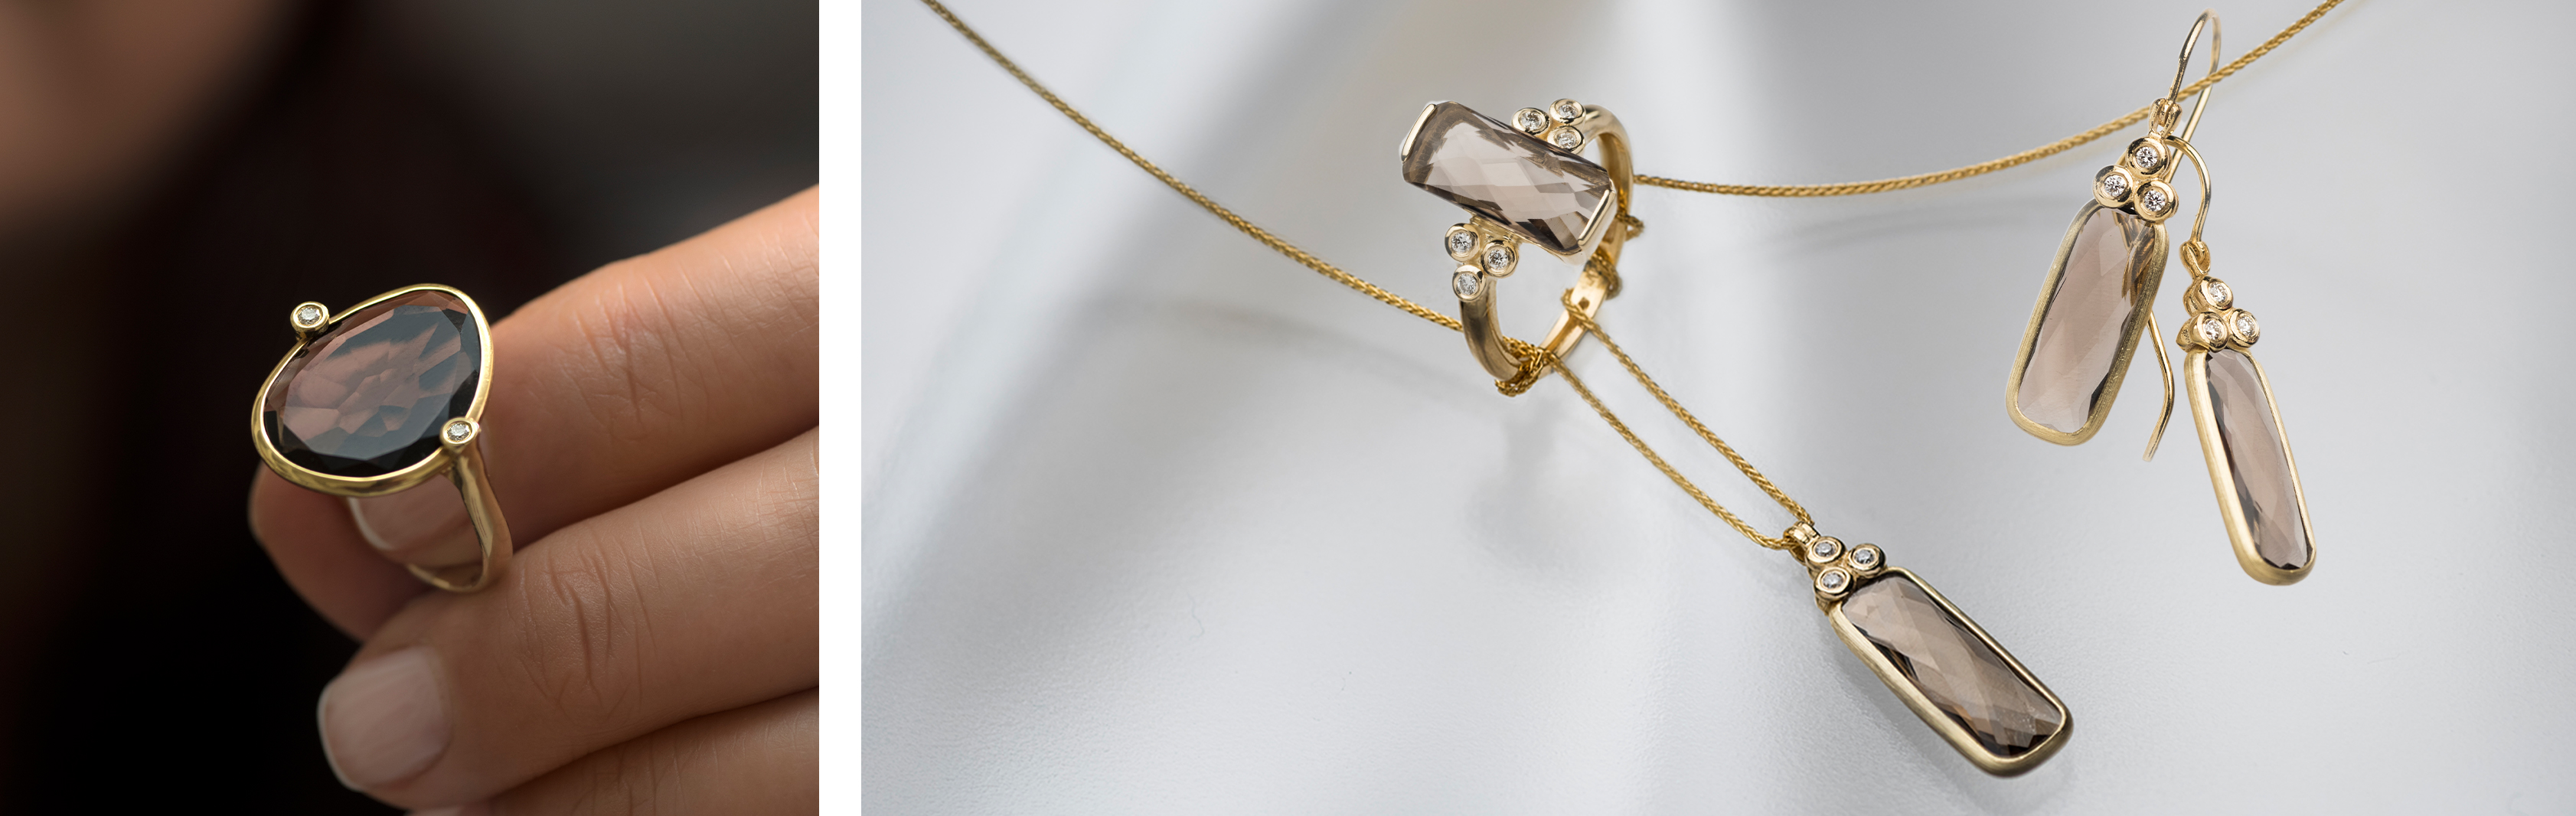 Praline Collection | 14K Gold Jewelry with Smoky Quartz and Diamonds